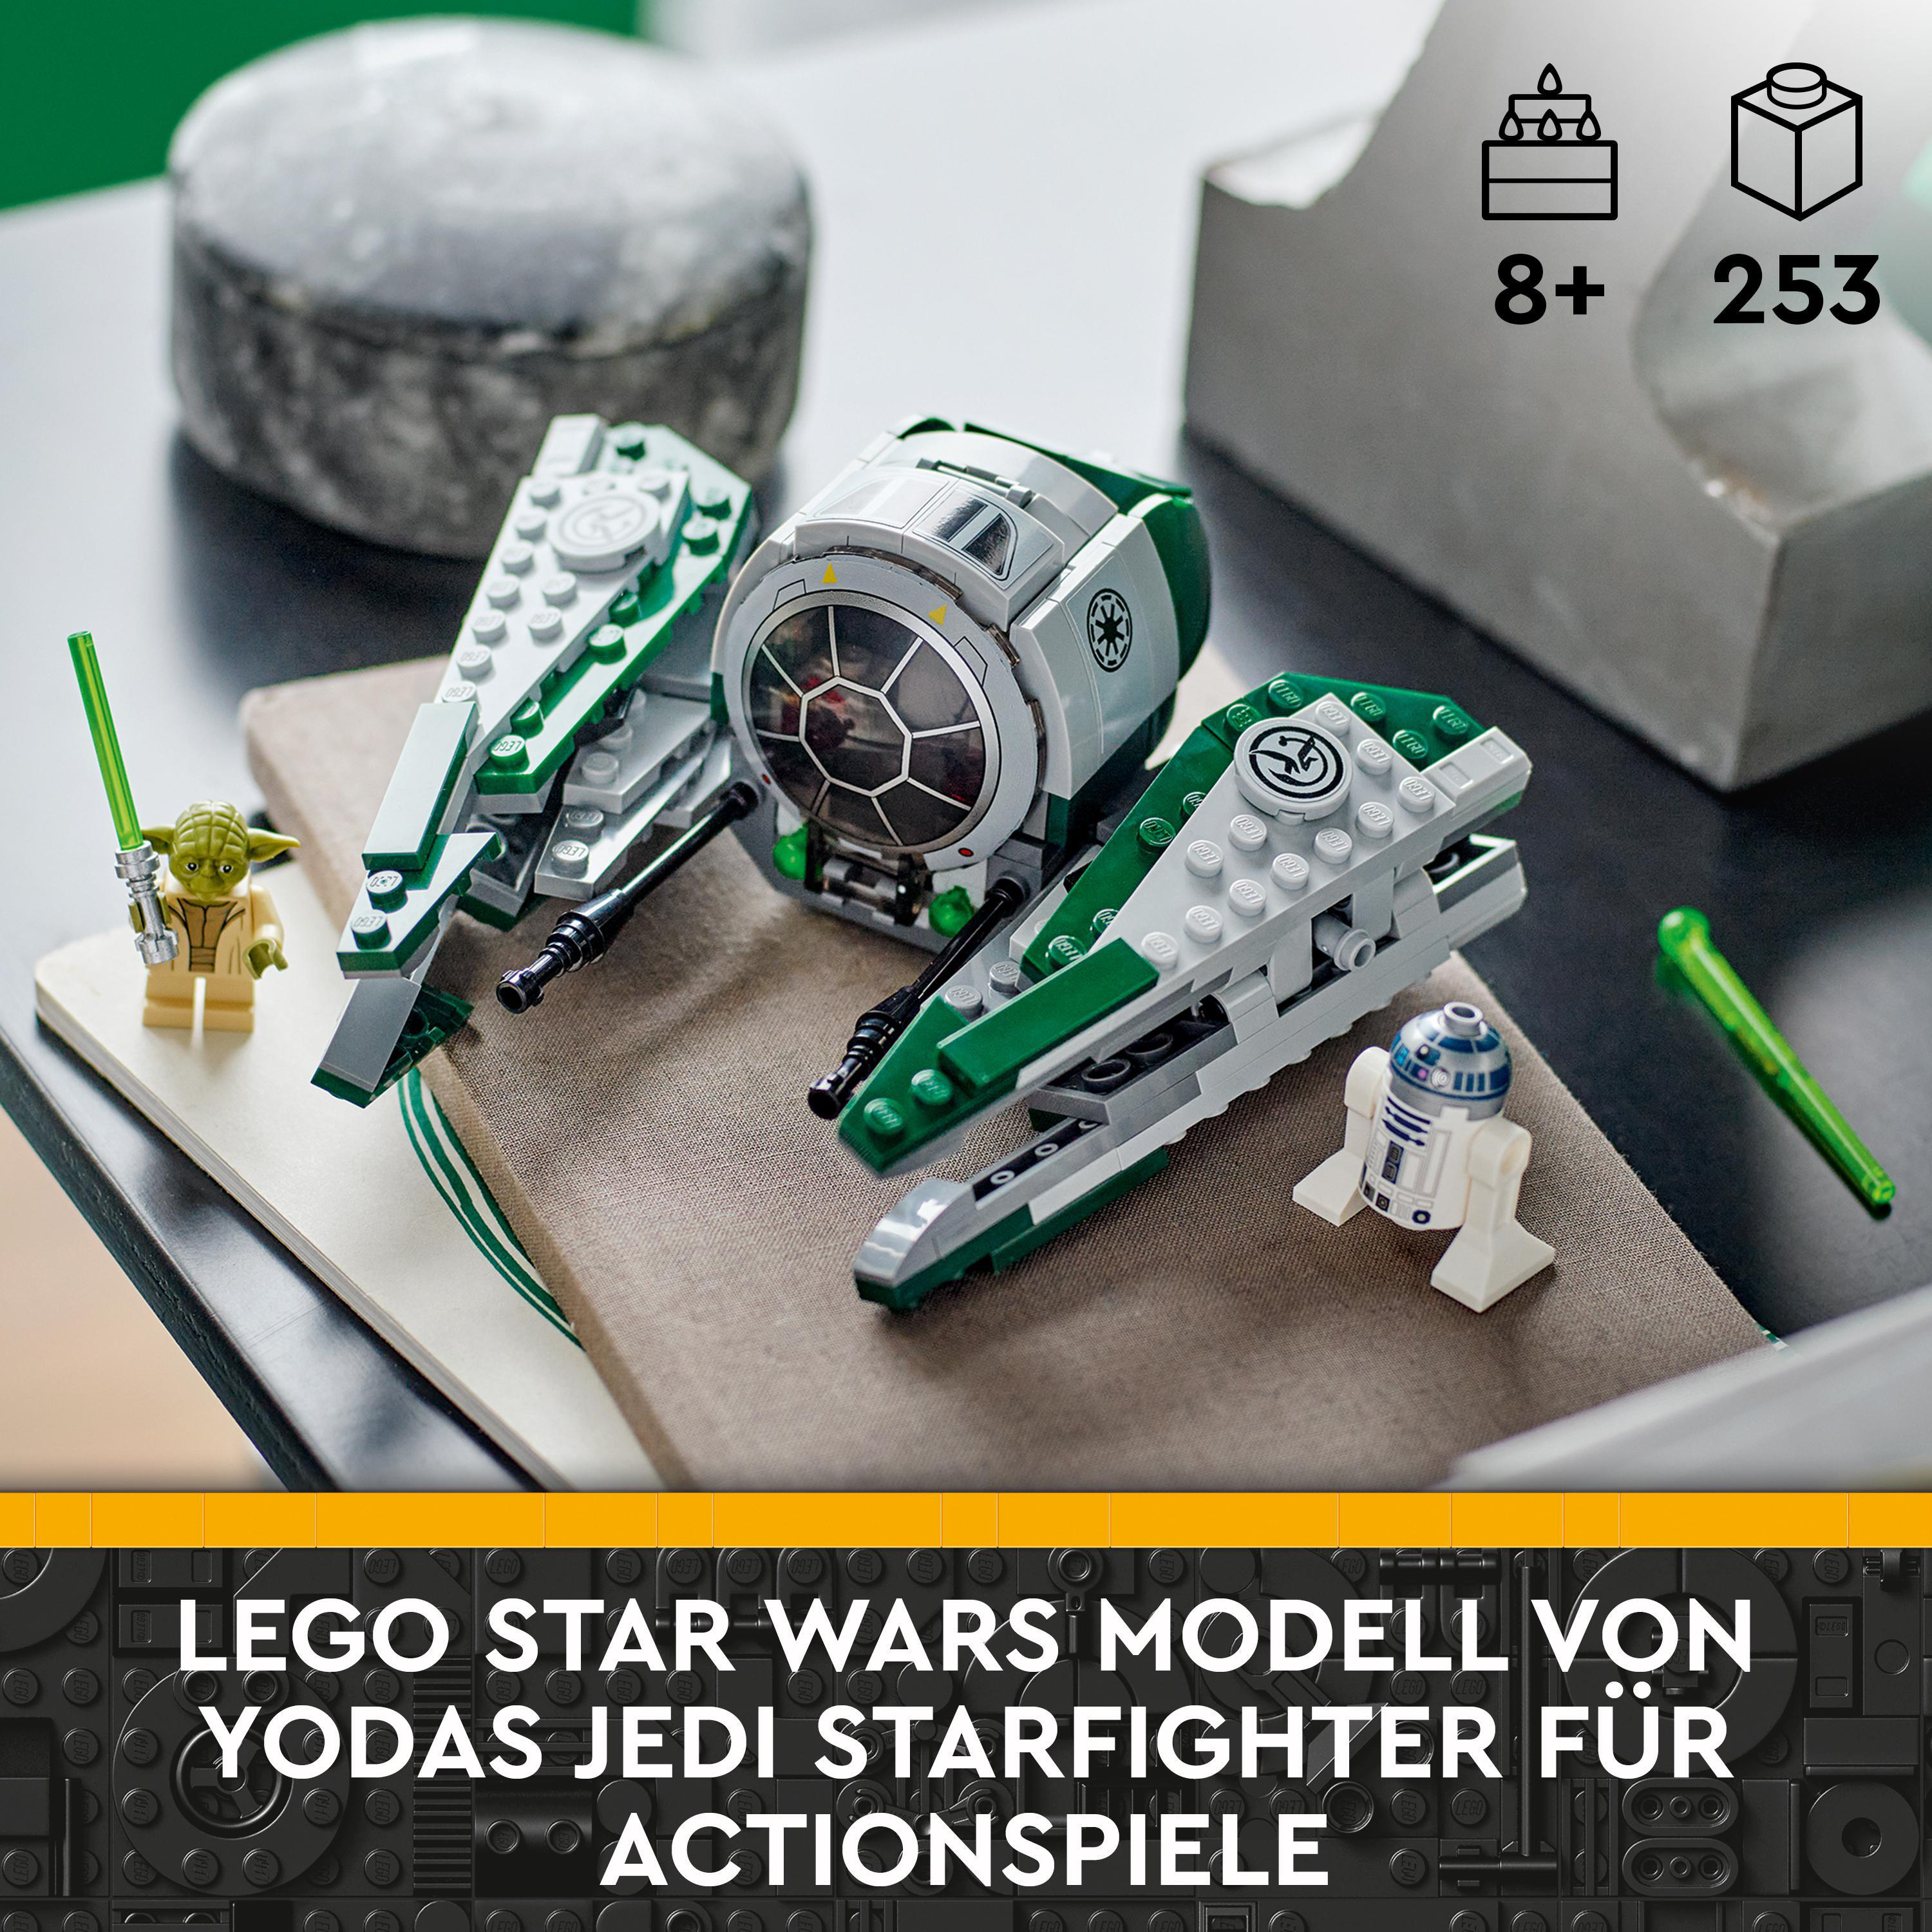 LEGO Star Wars 75360 Yoda\'s Mehrfarbig Bausatz, Jedi Starfighter